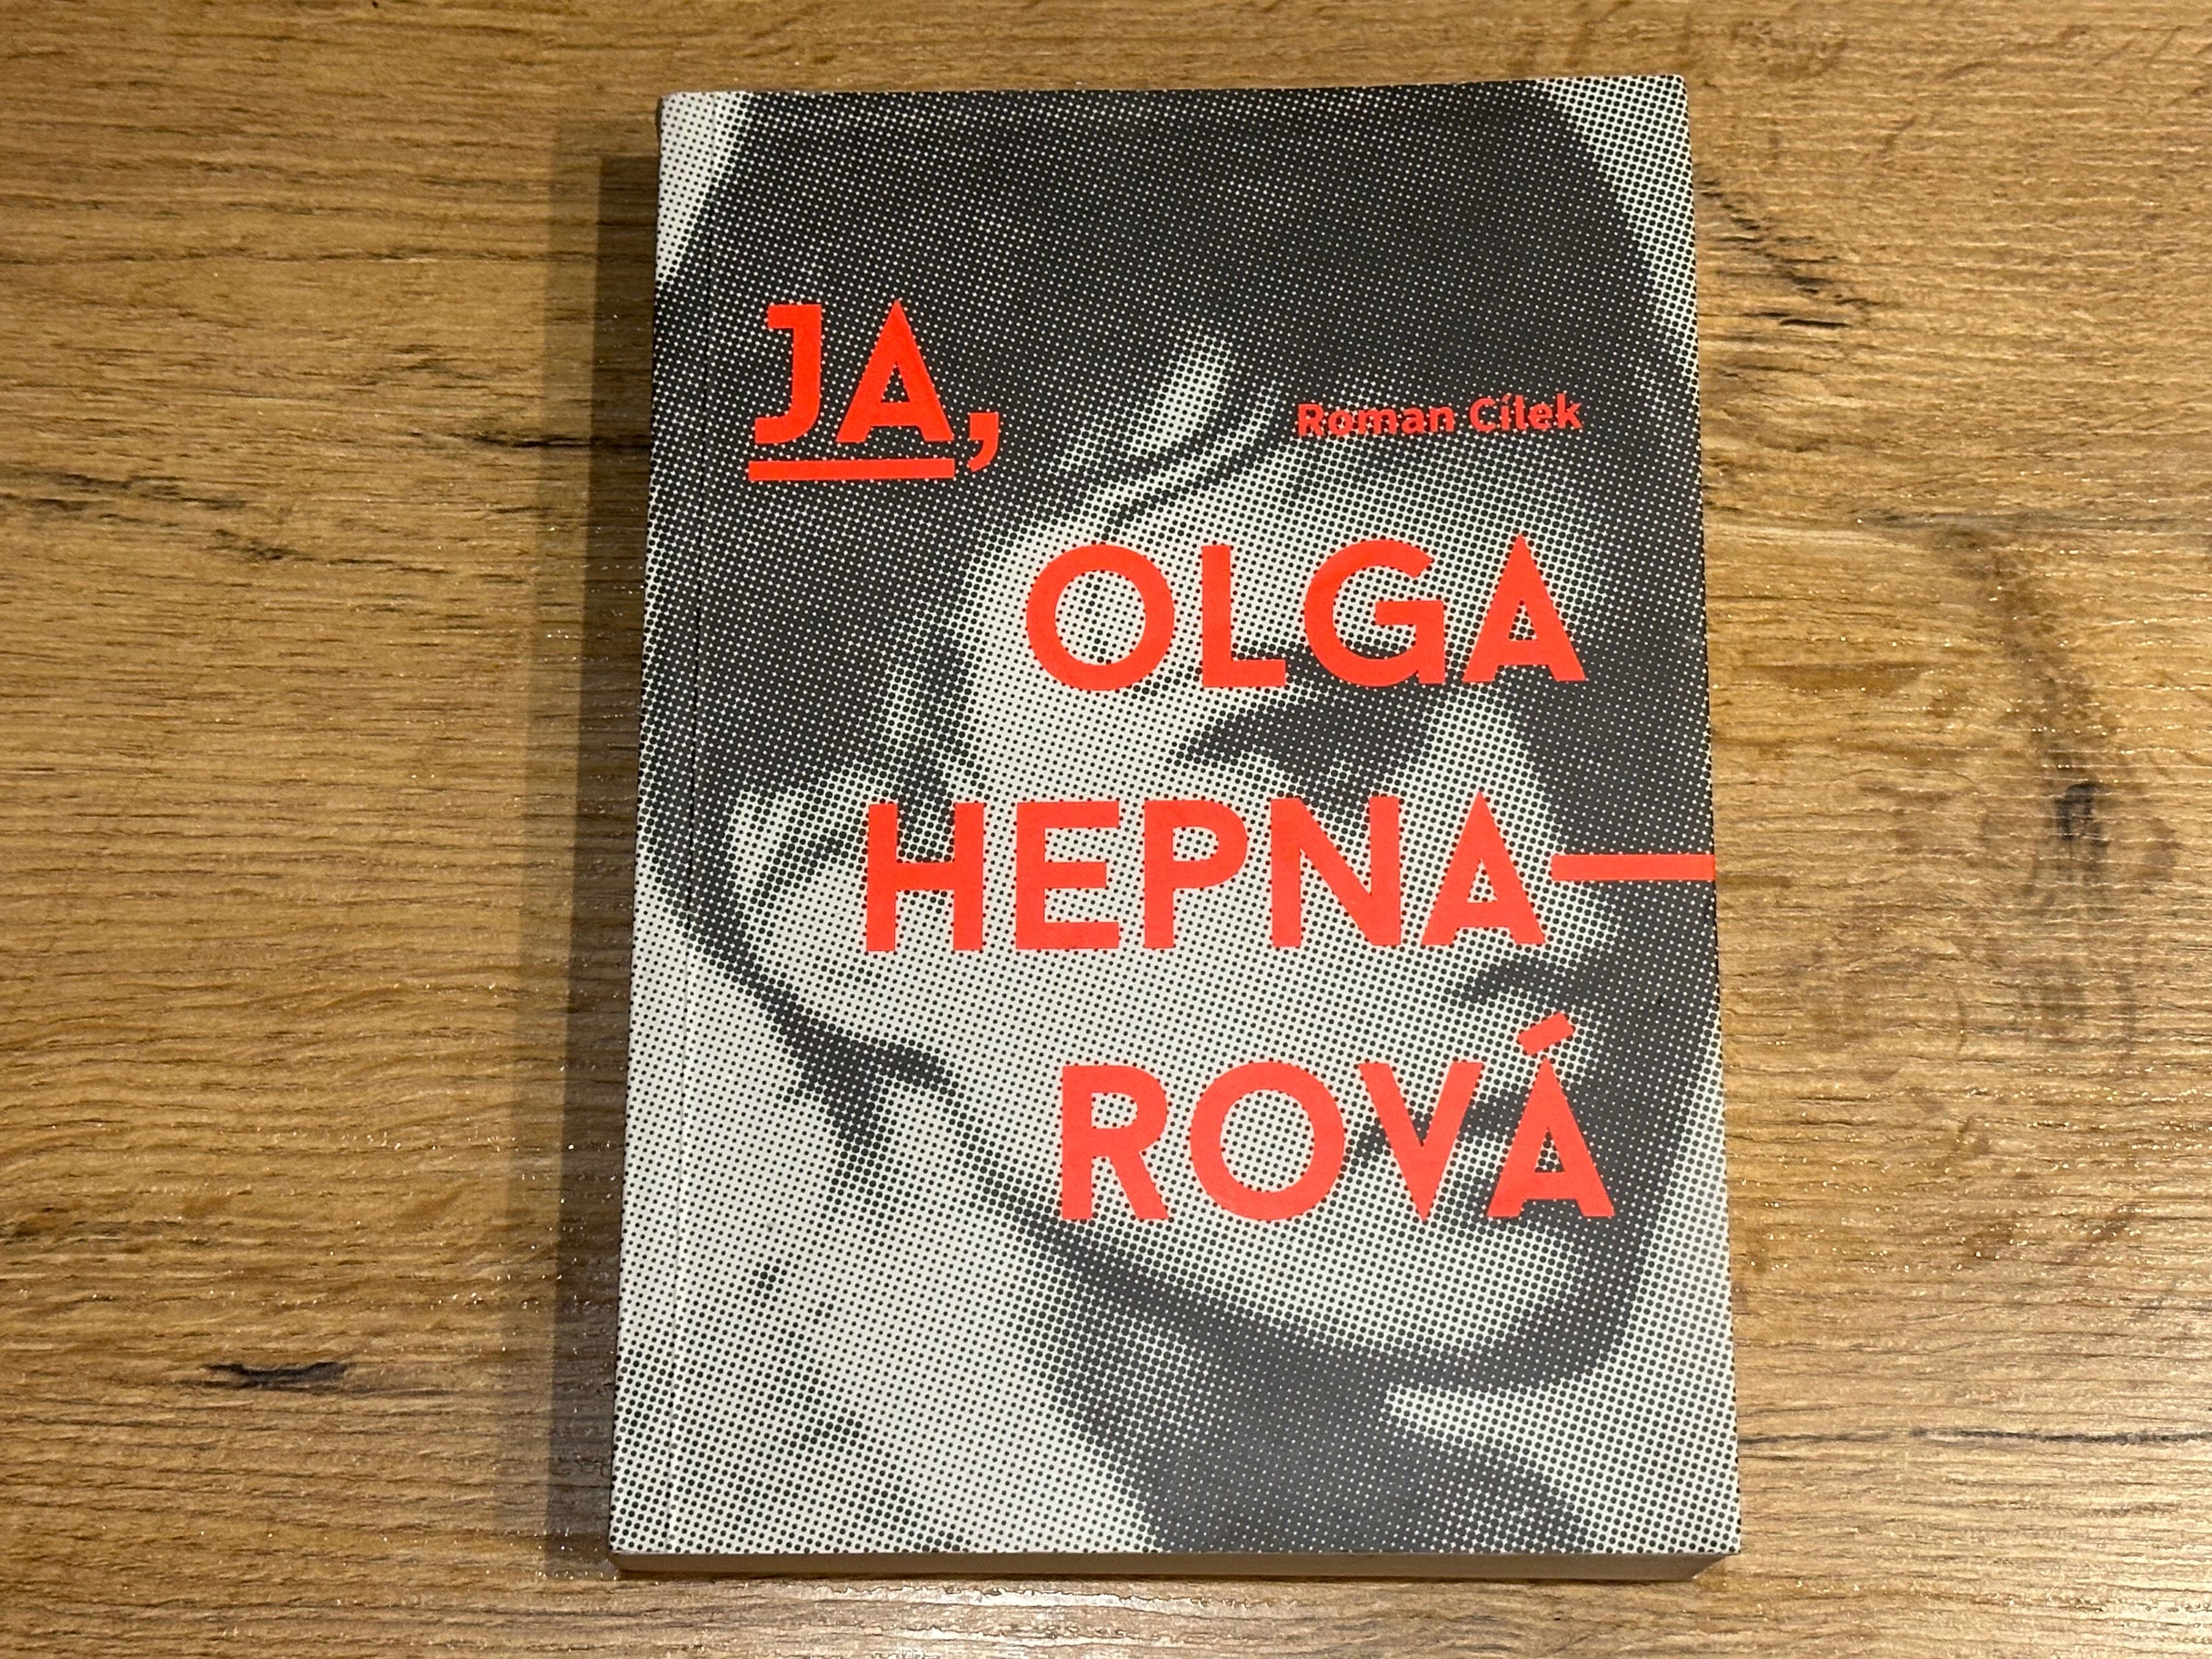 Ja, Olga Hepnarova Roman Cilek